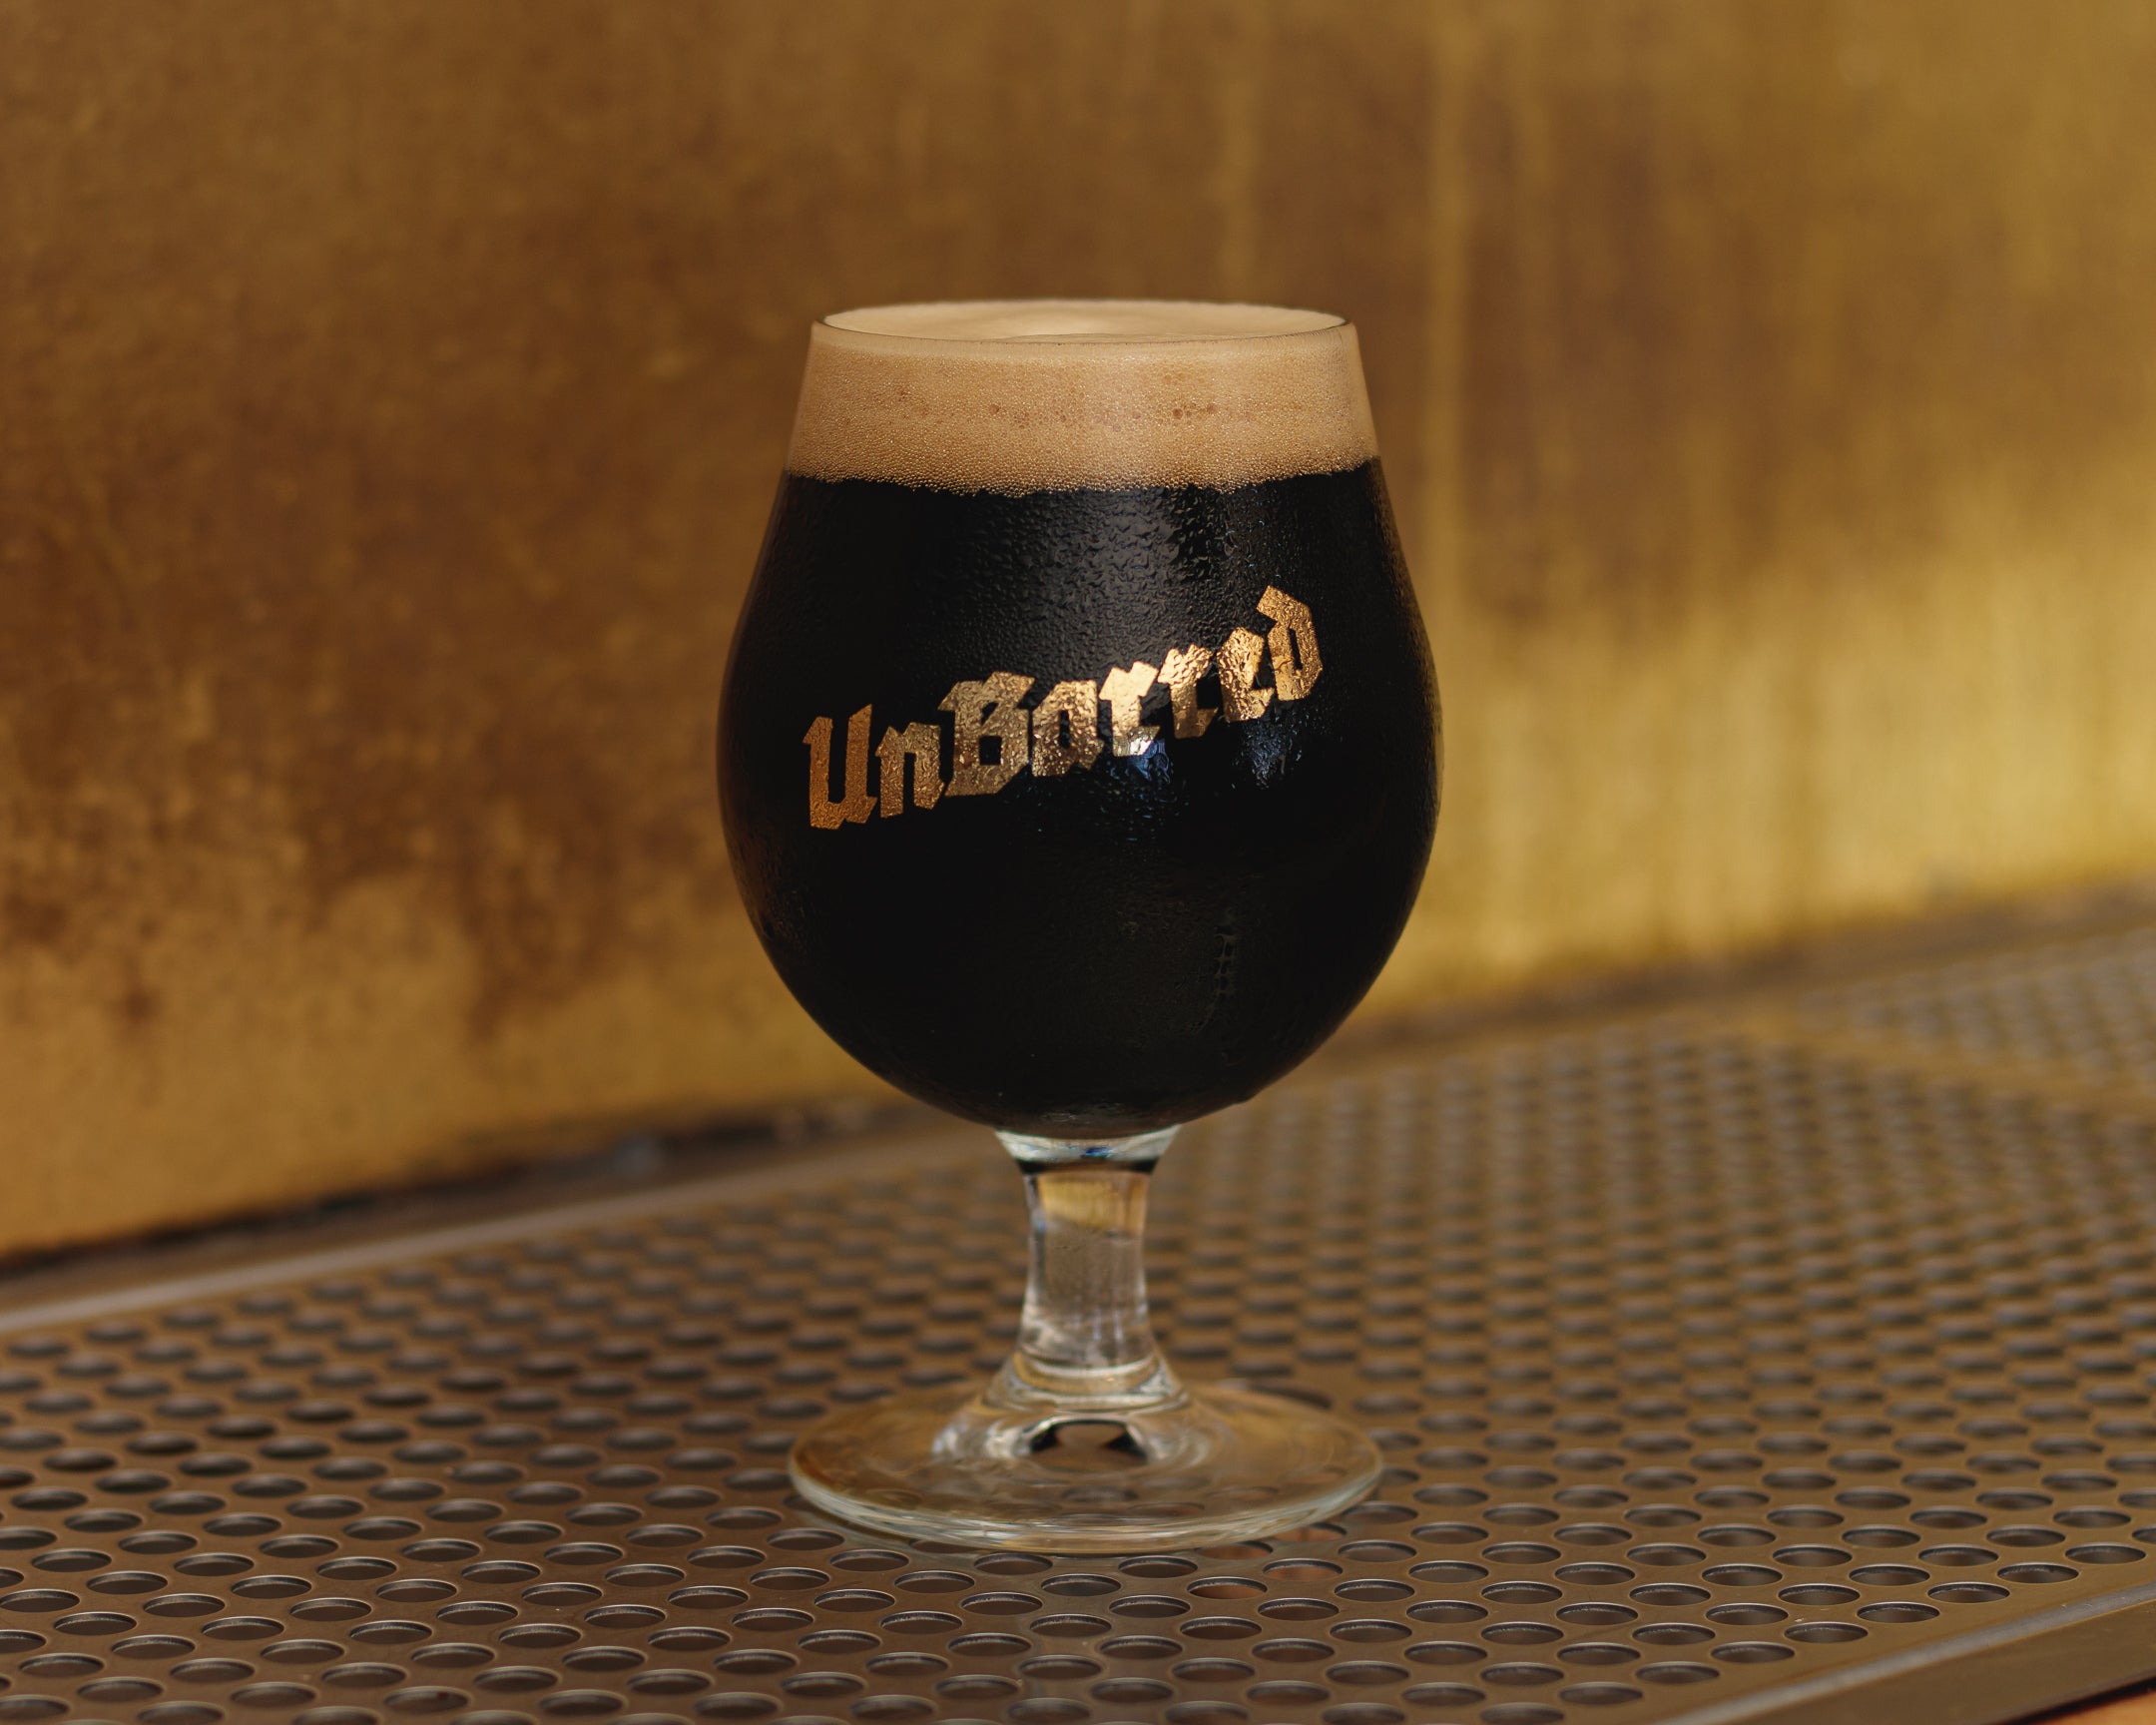 The Unbarred Brewery Tasting